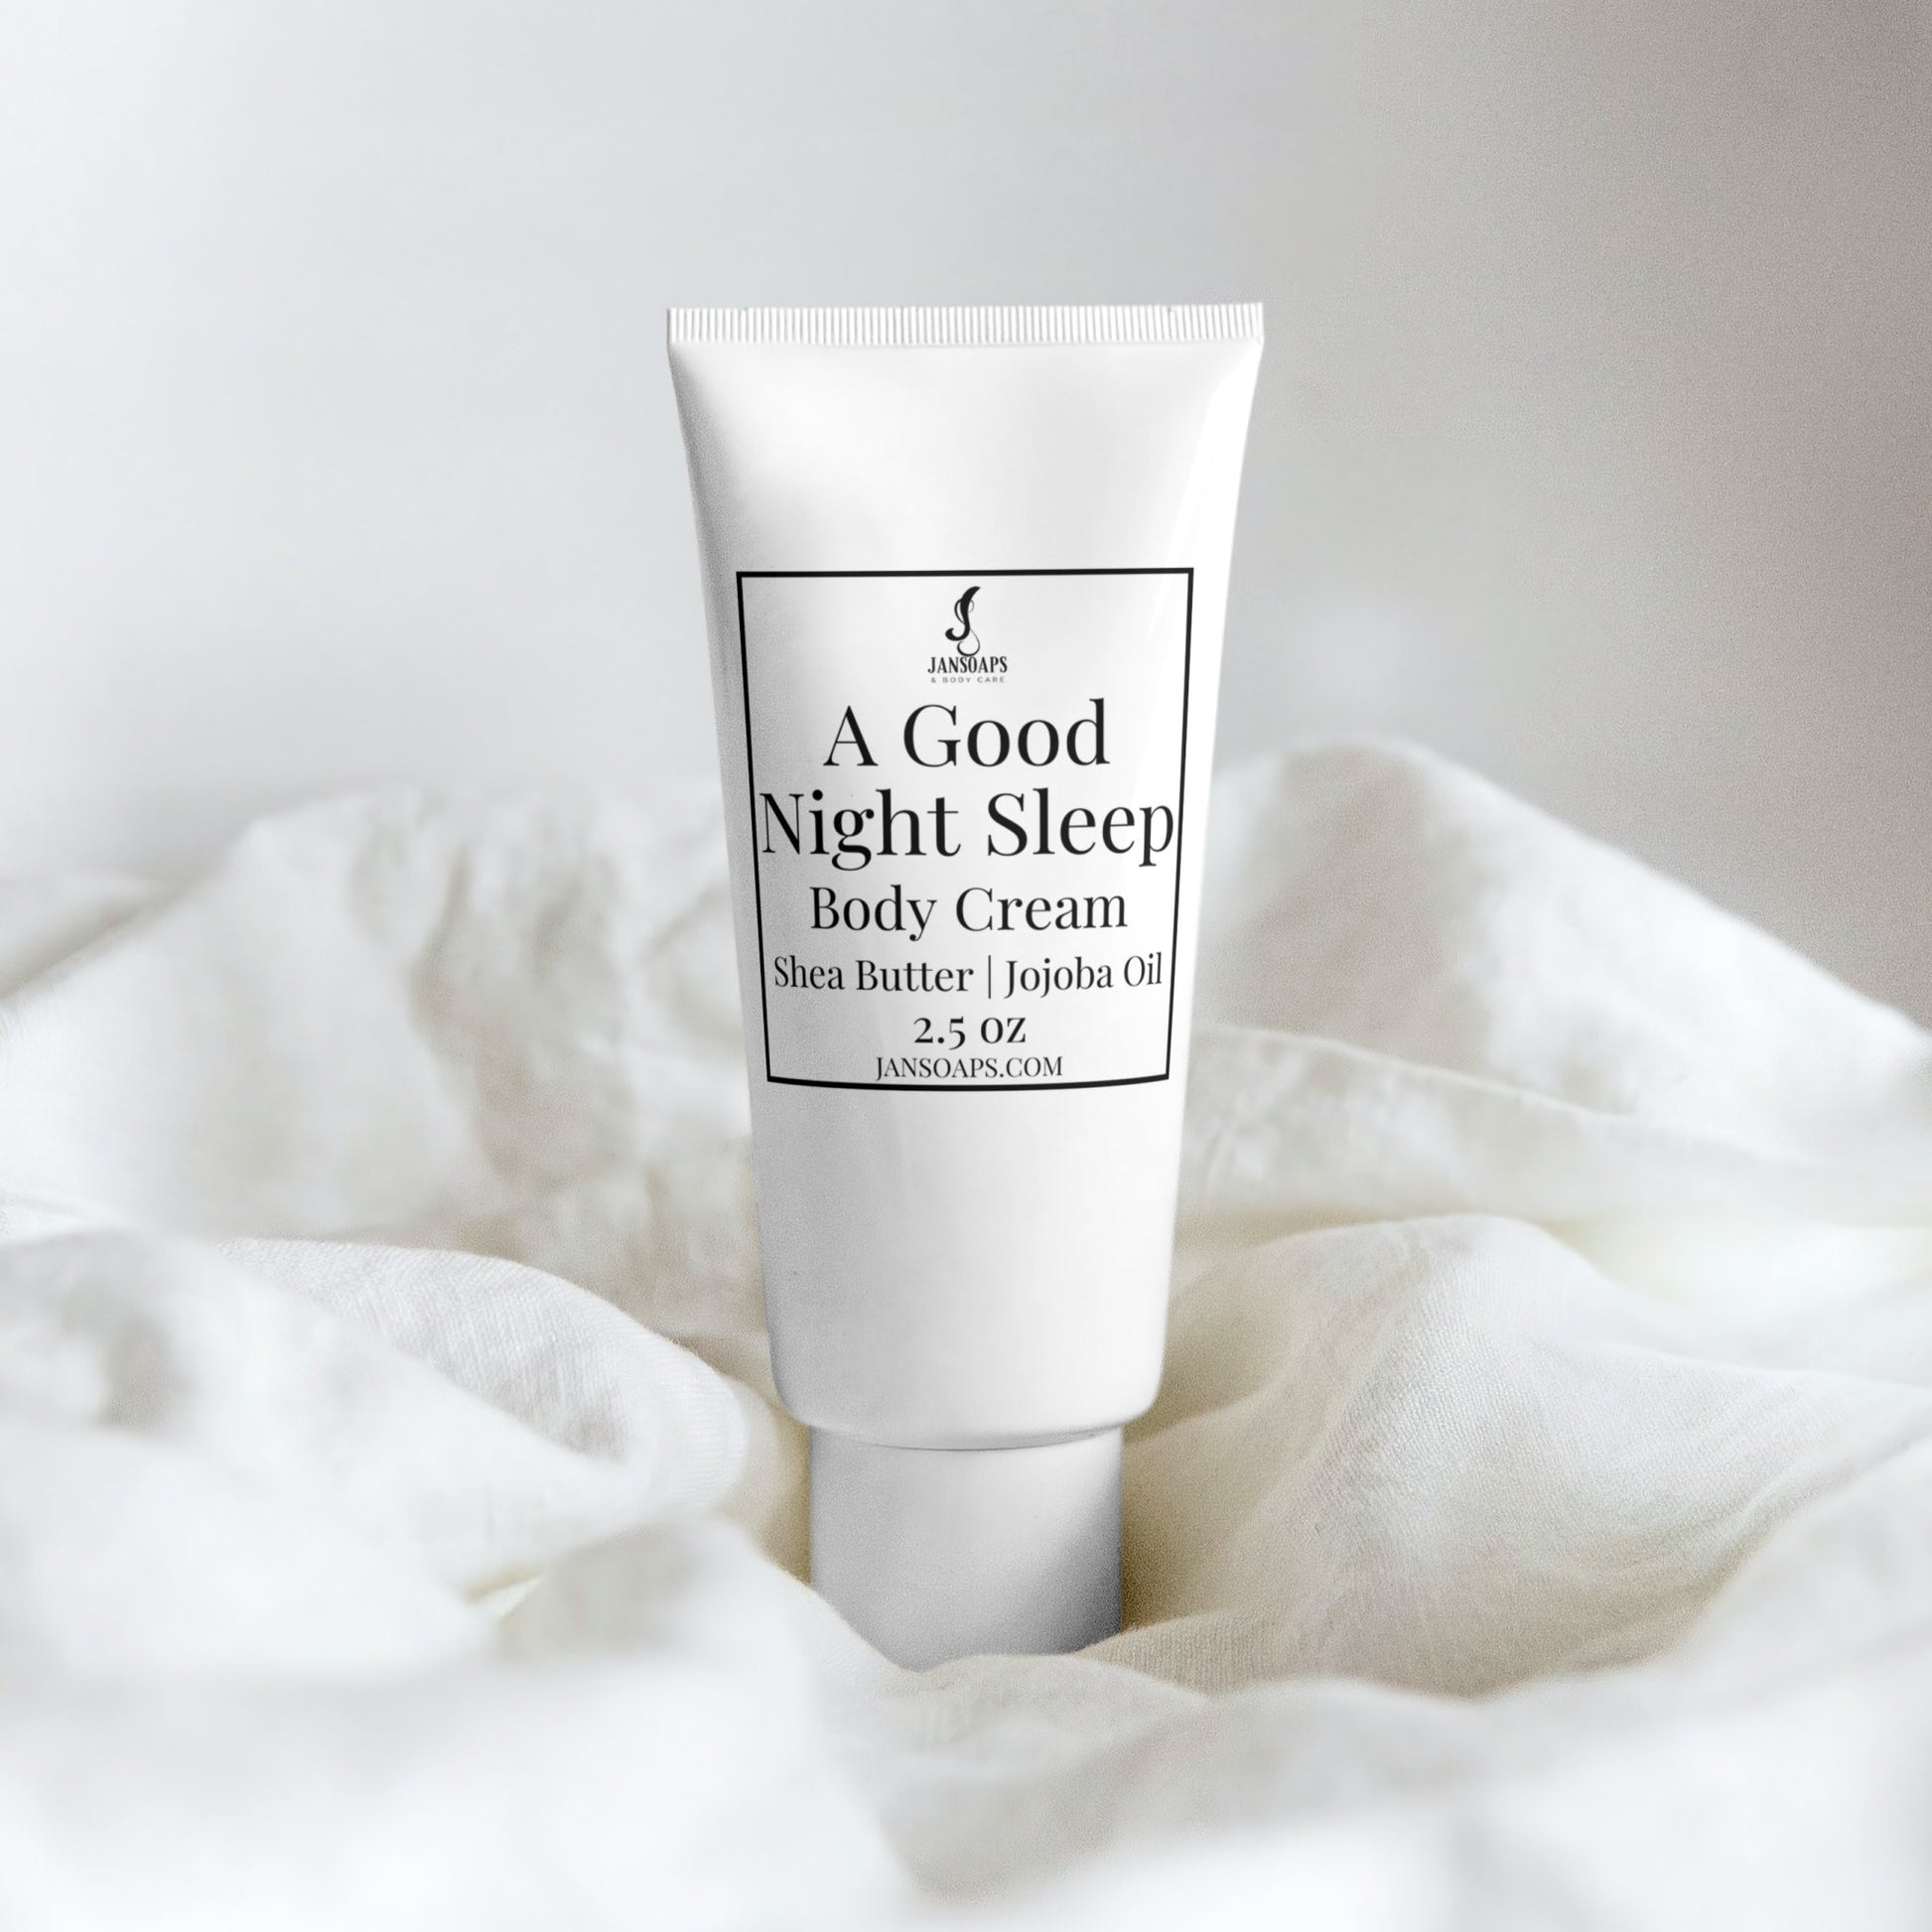 A Good Night Sleep Body Cream - Jan Soaps & Body Care